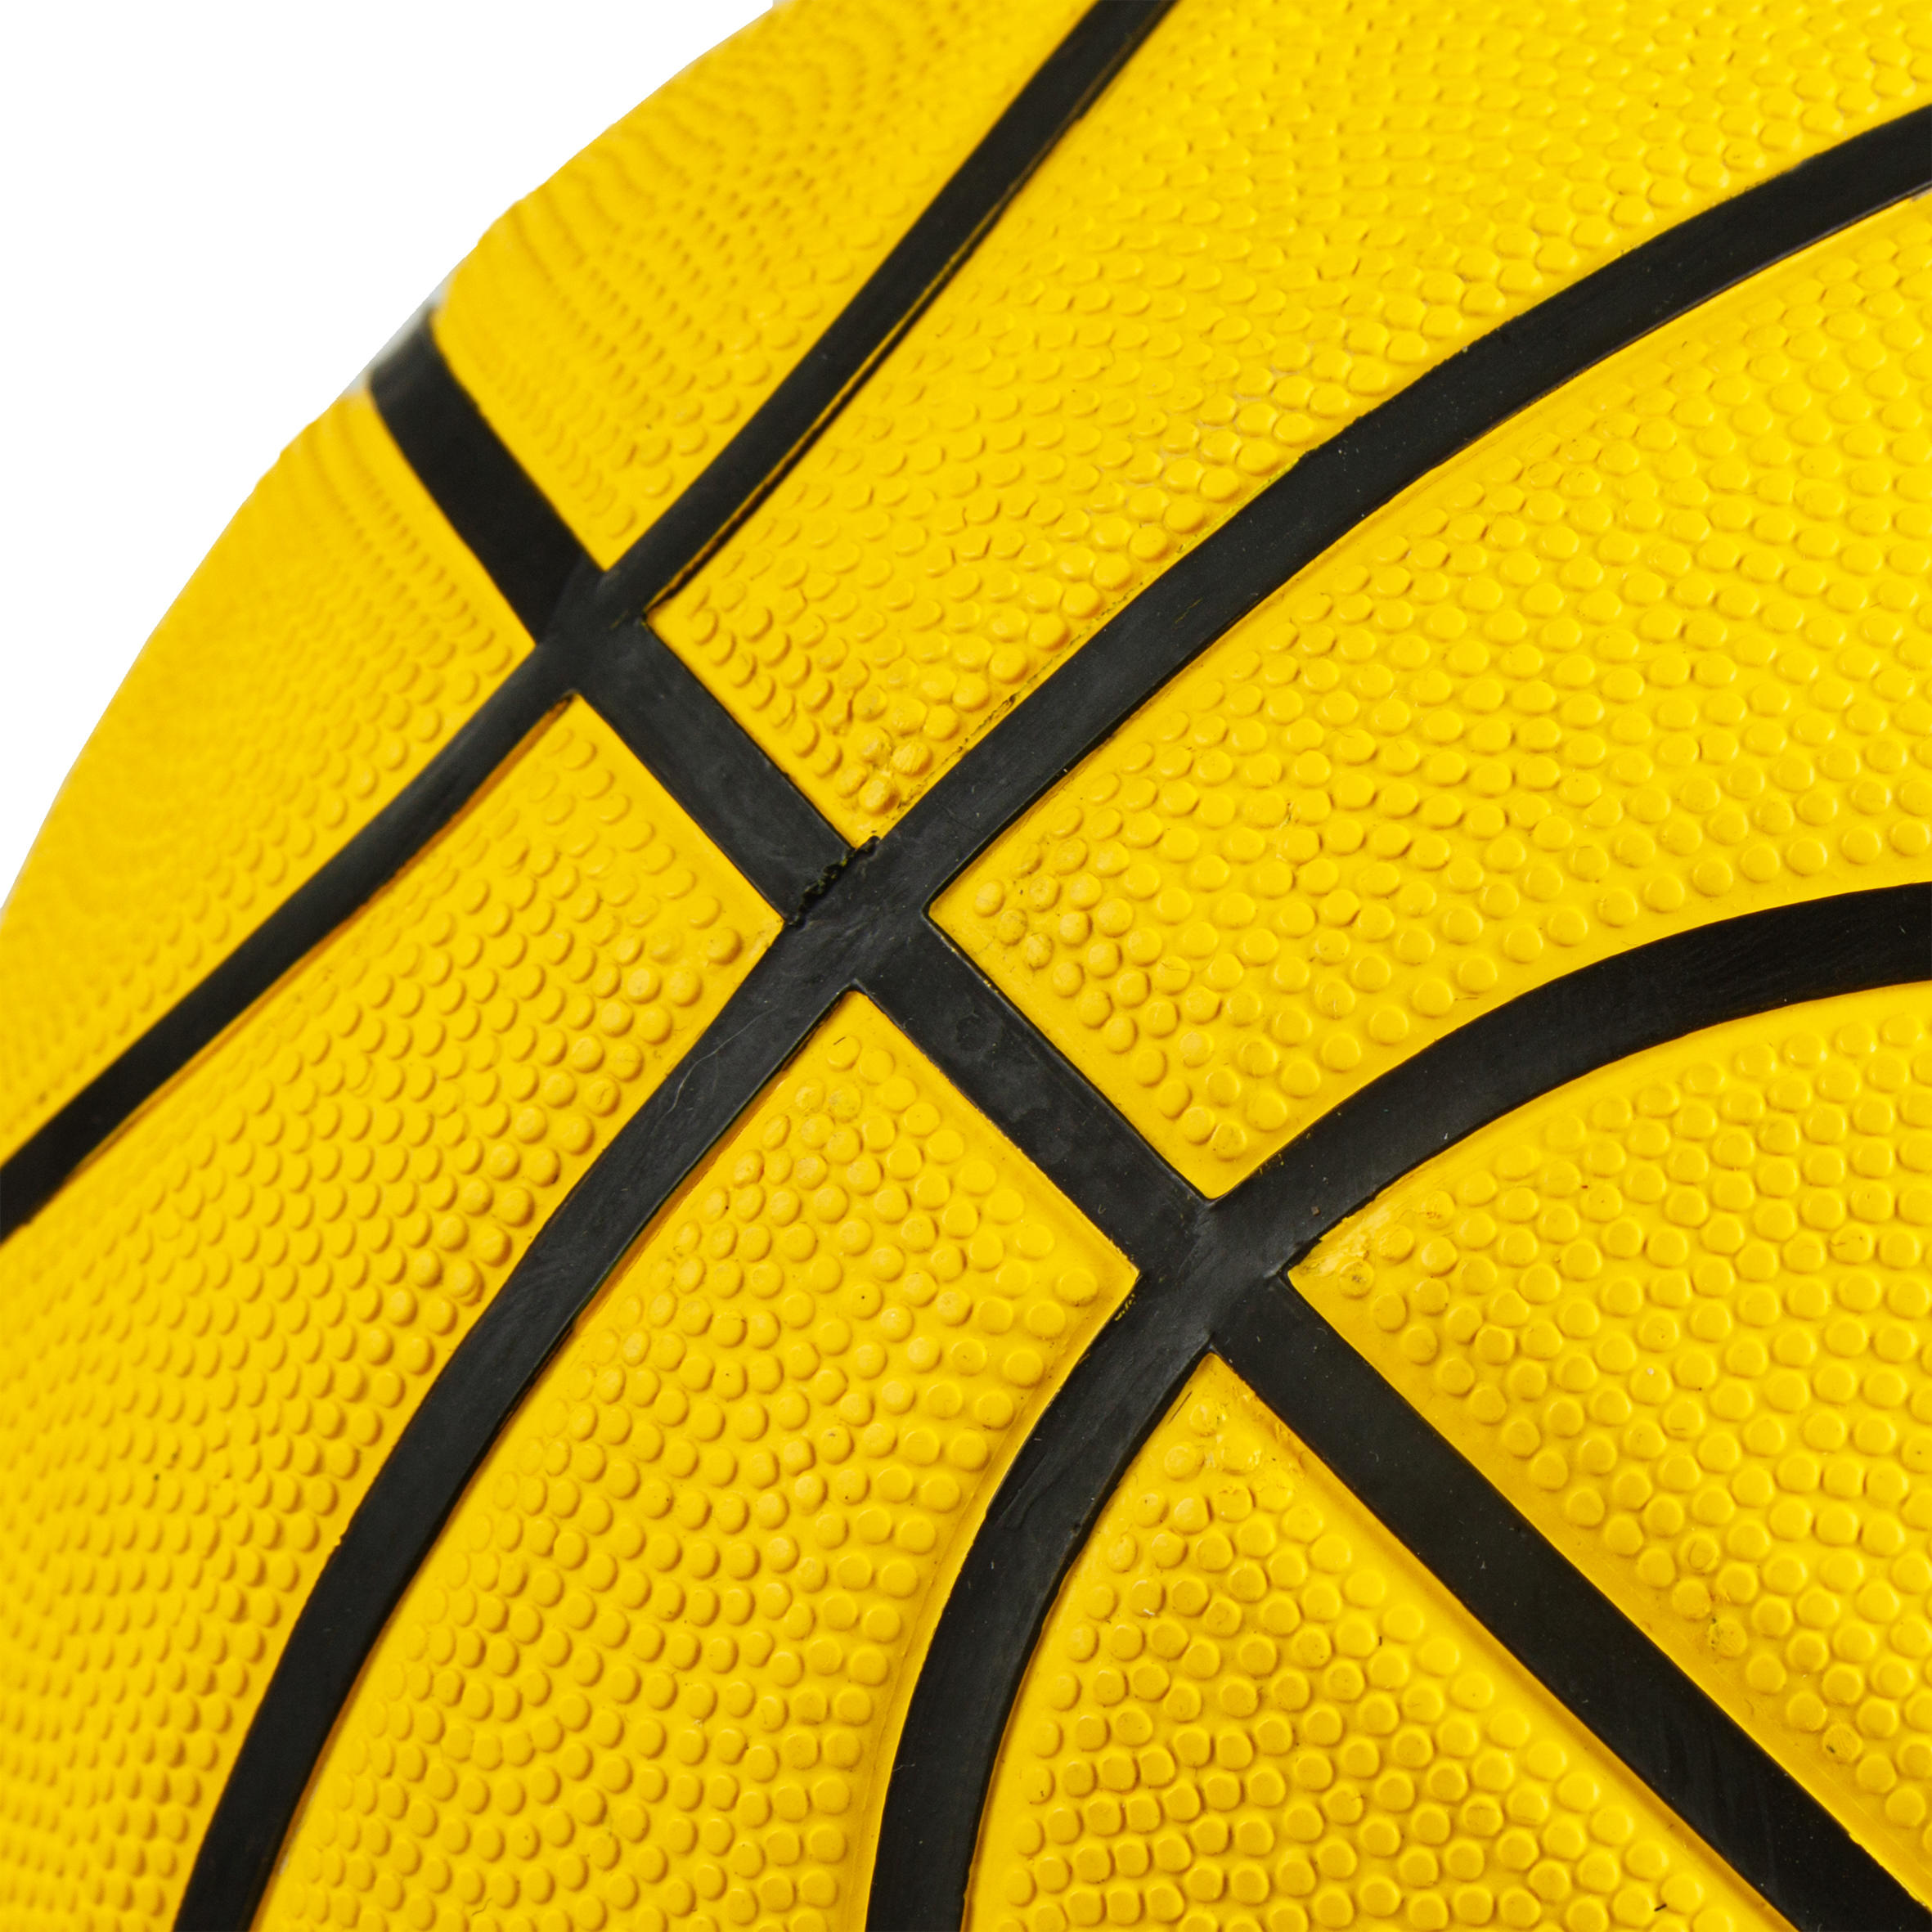 Ballon de basketball R100 - Enfants - TARMAK